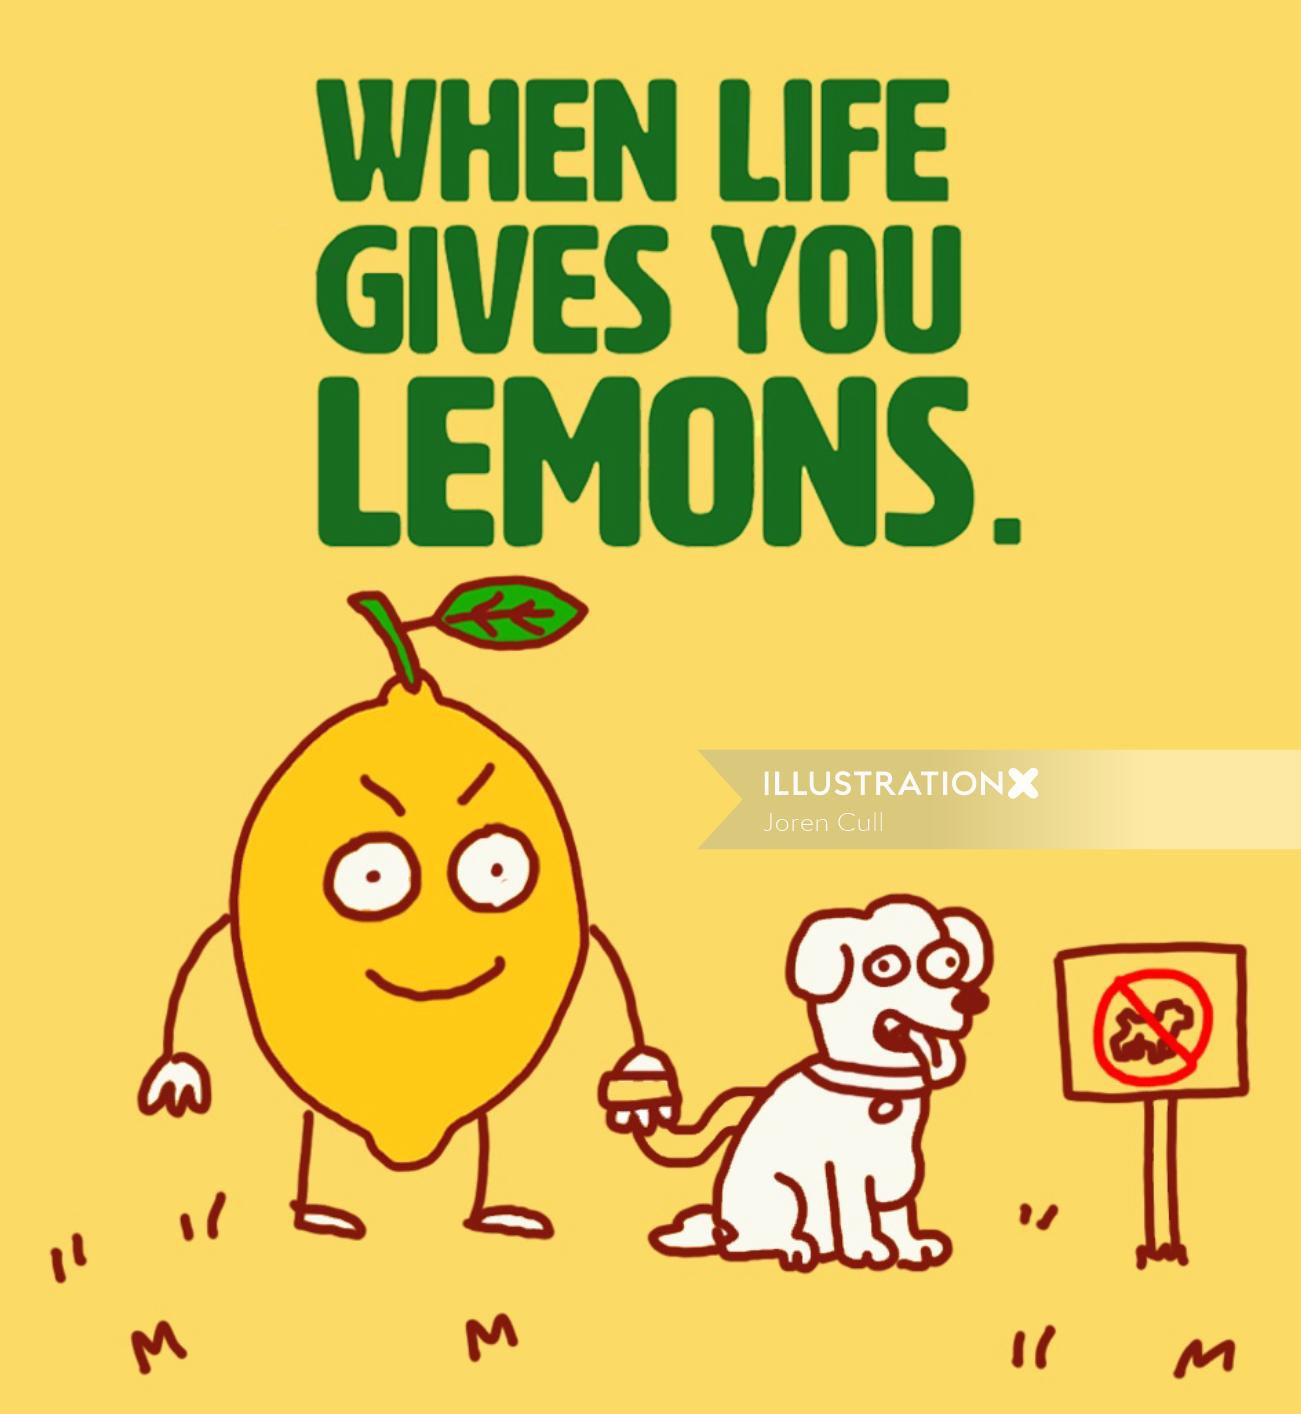 Advertising gif animation for lemonade 